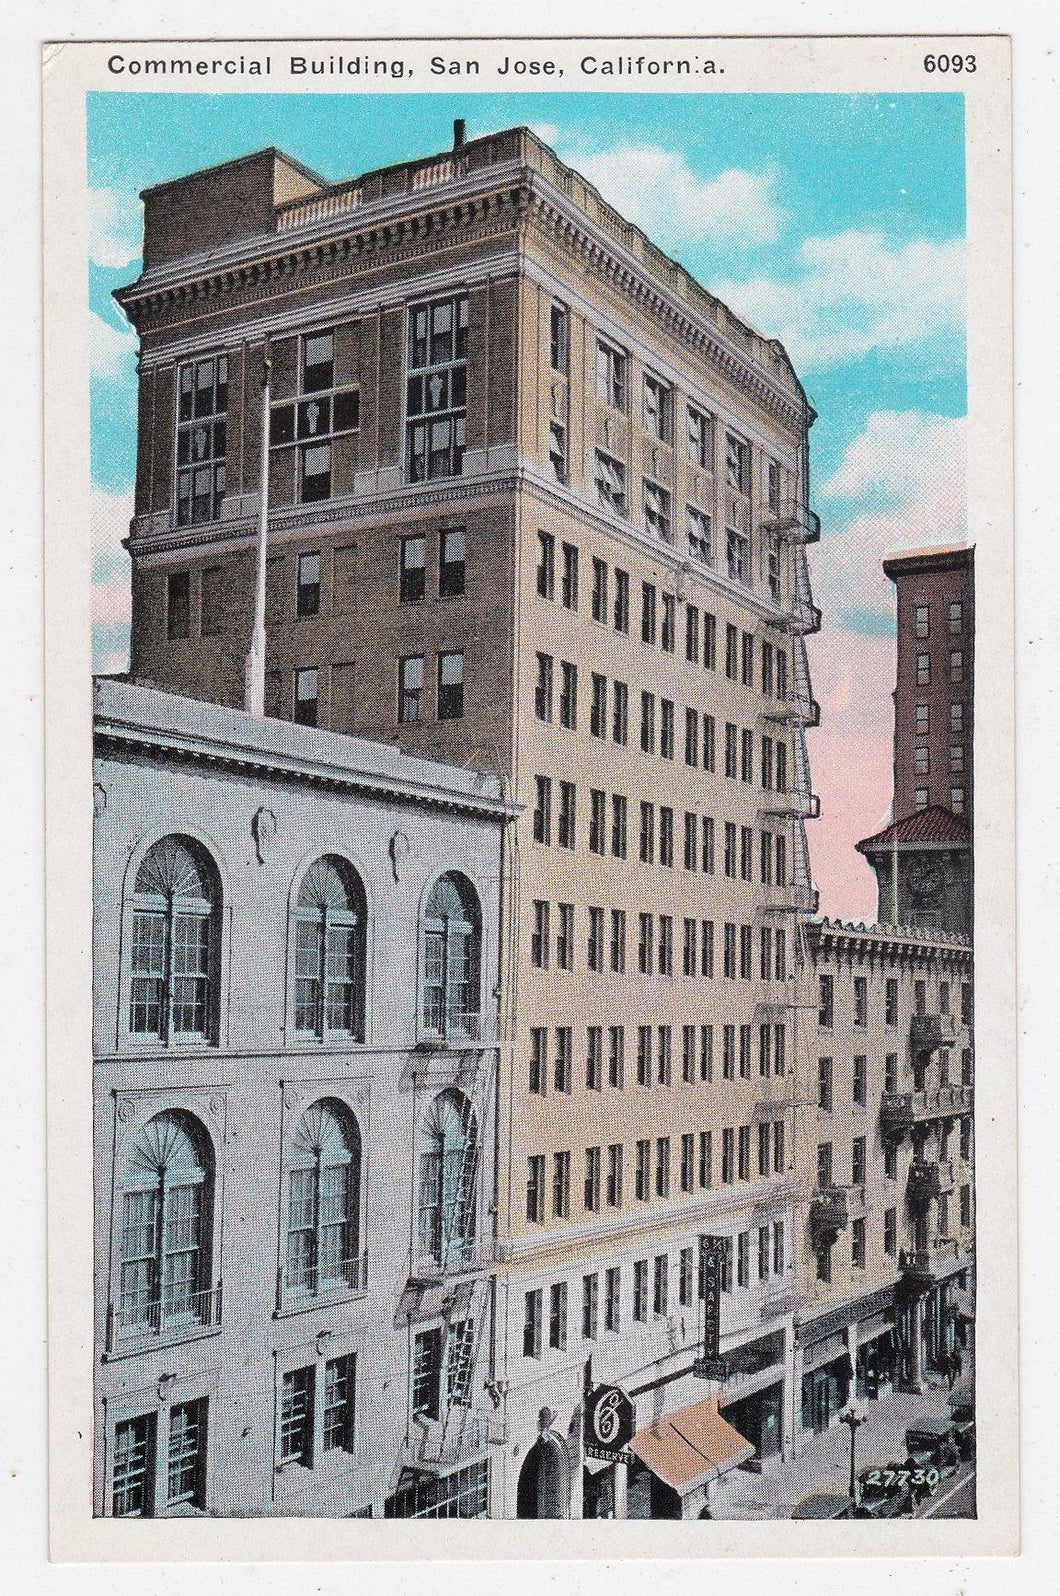 Commercial Building Downtown San Jose California 1920's Postcard - TulipStuff